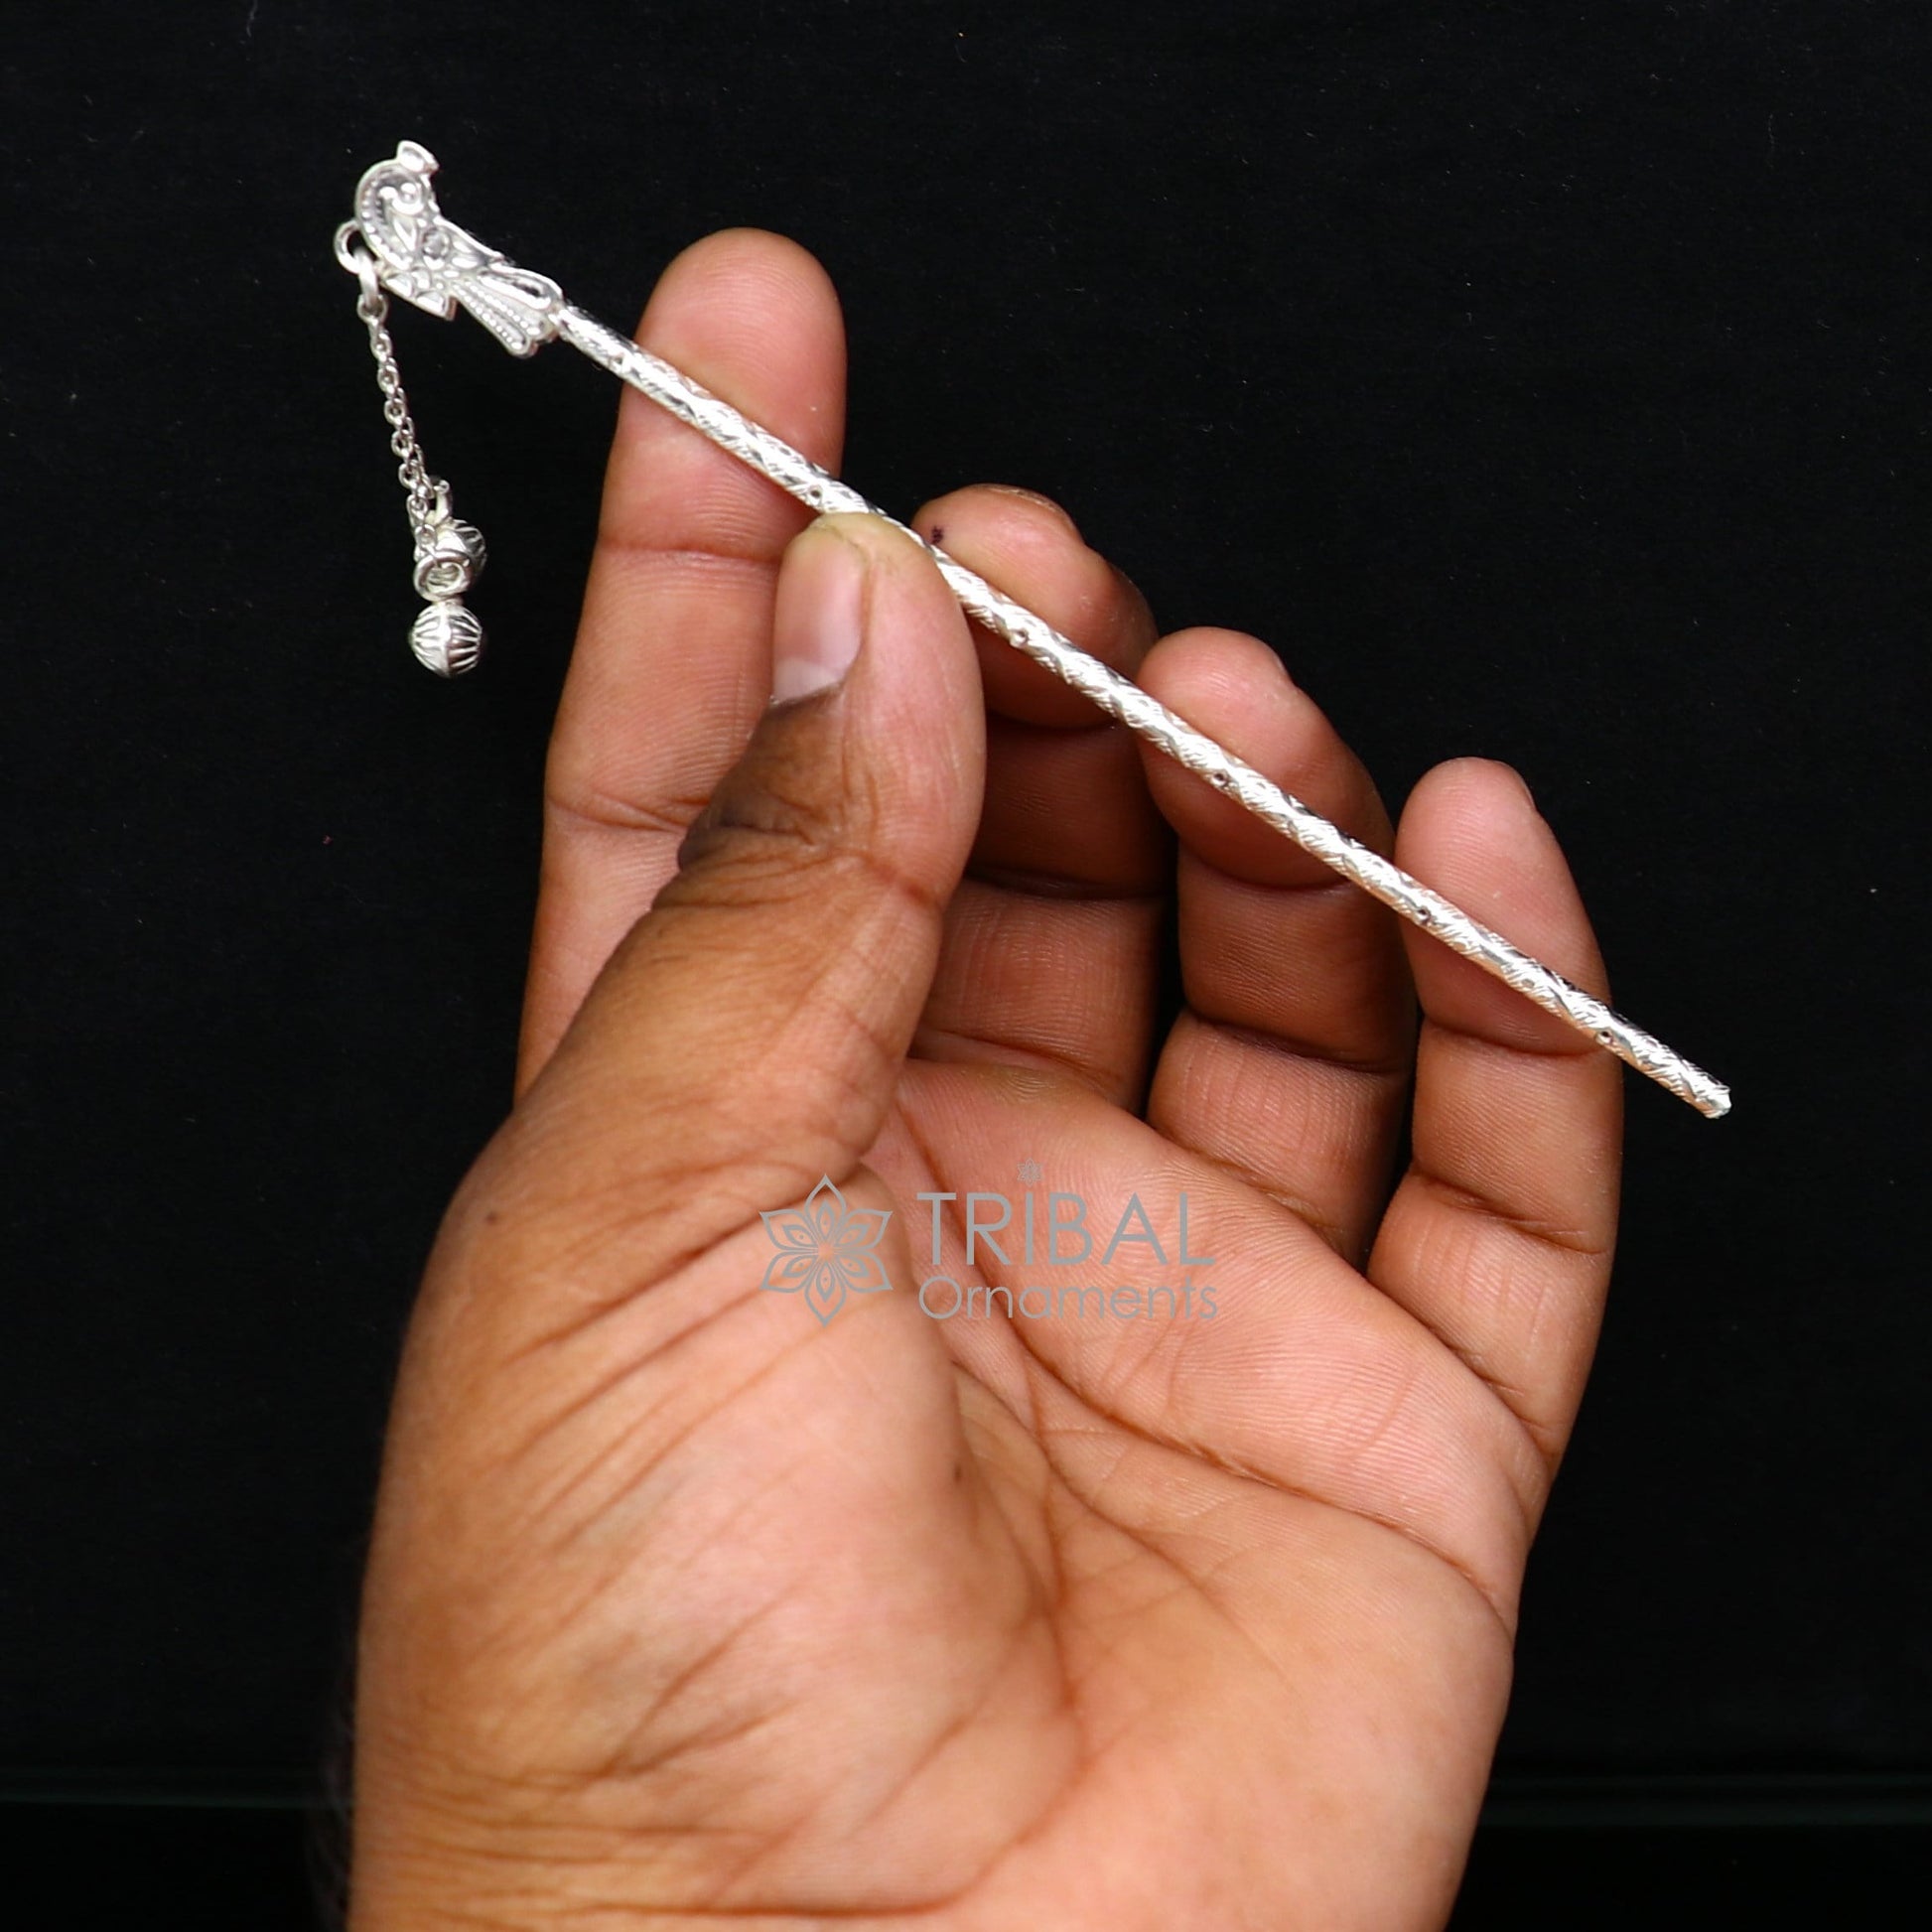 5" Flute divine 925 sterling silver handmade idol krishna flute, silver bansuri, laddu gopala flute, little krishna flute puja art su1122 - TRIBAL ORNAMENTS